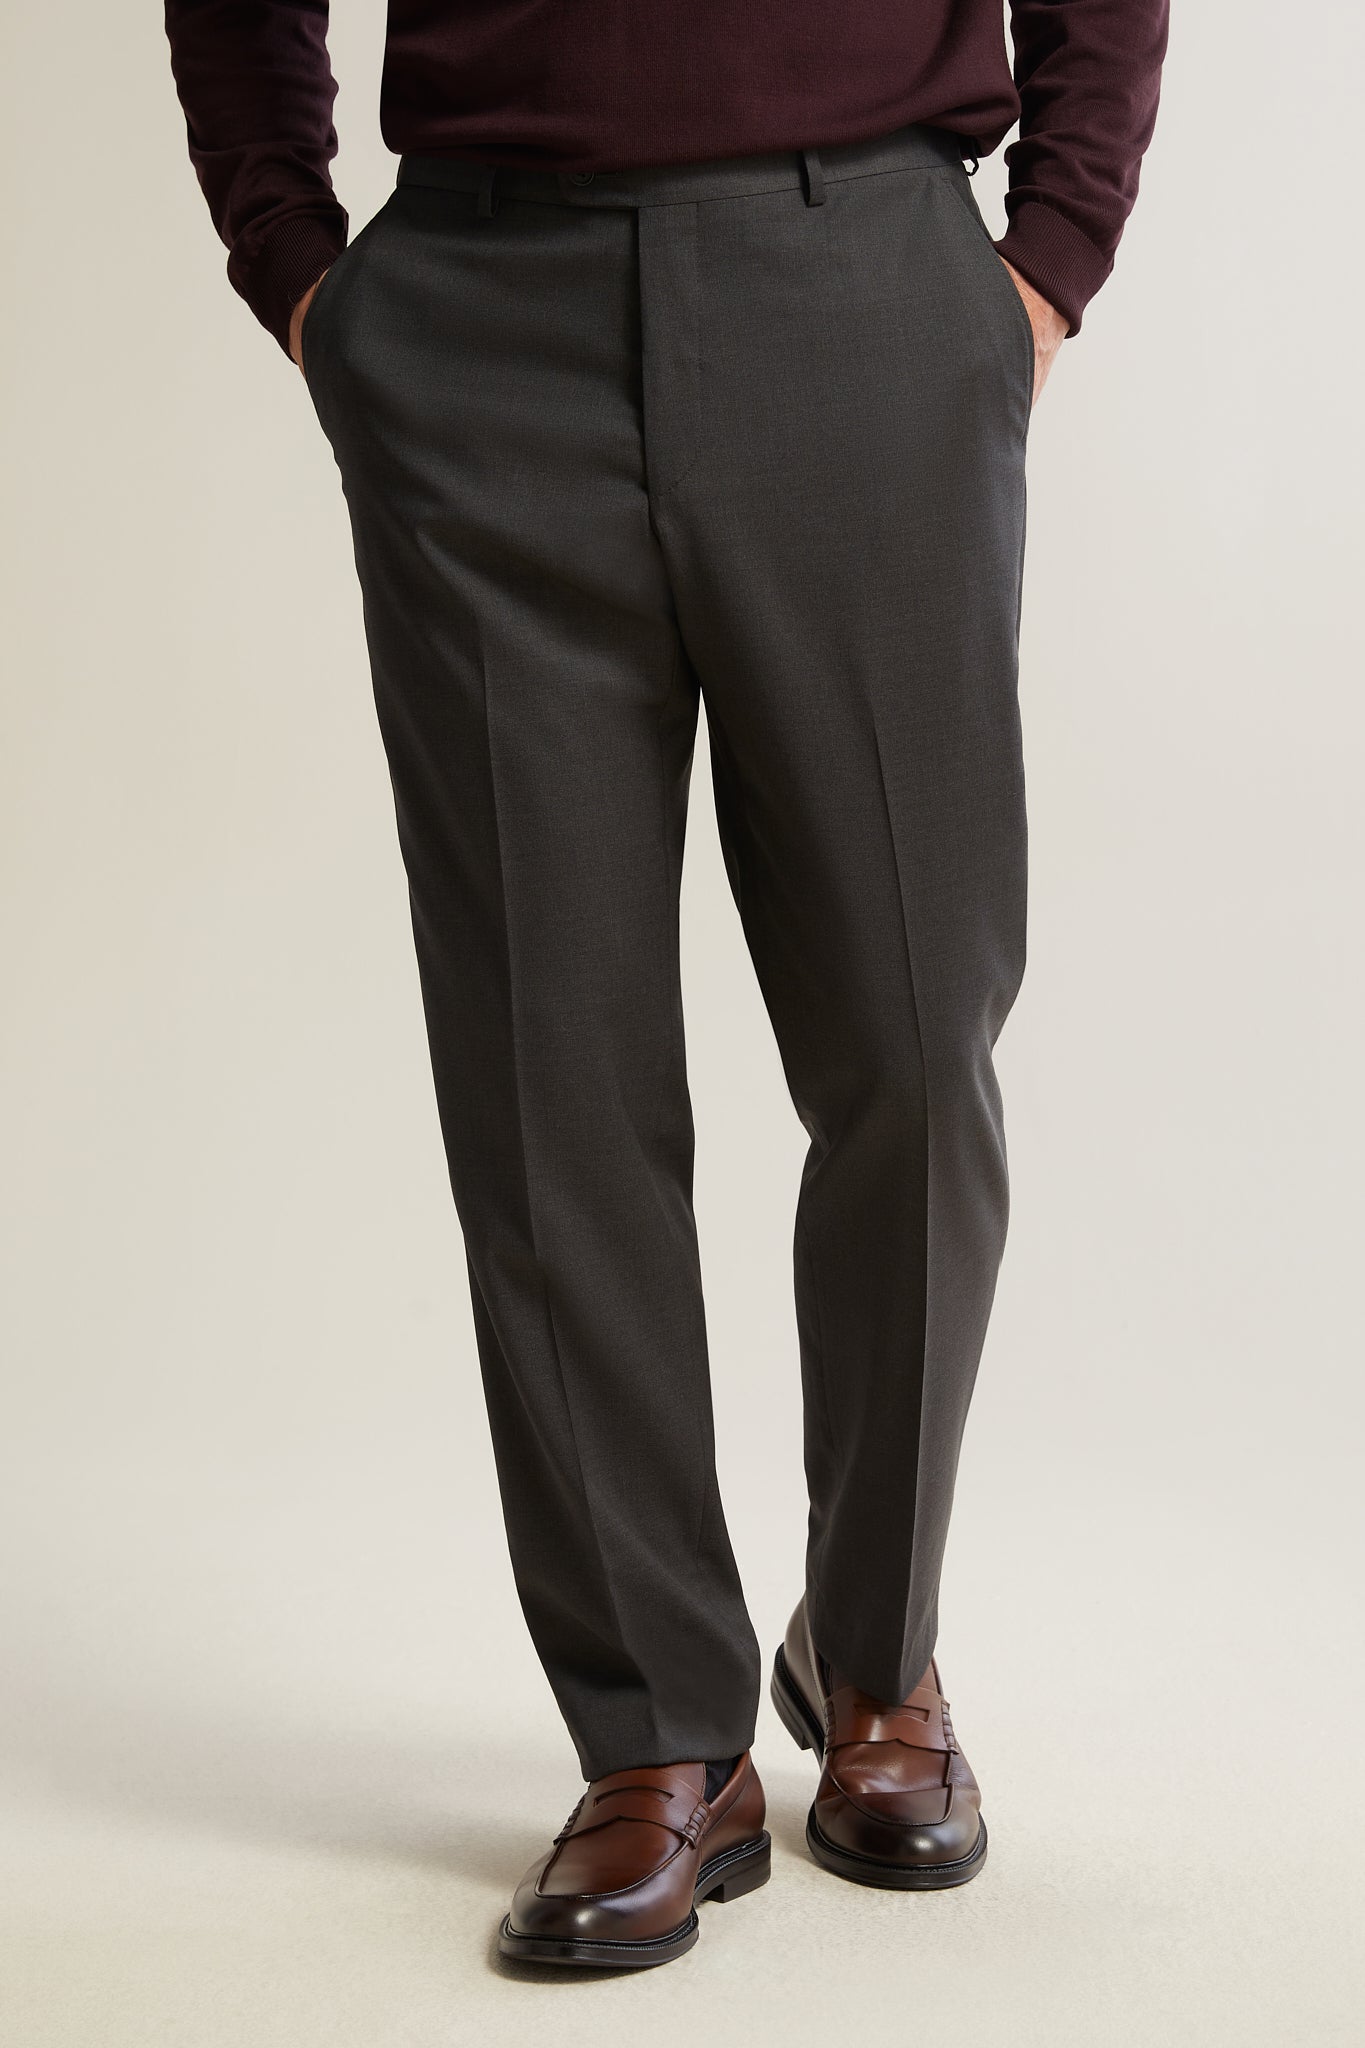 Buy De NoVo Men's Regular Fit Formal Trouser | Combo- Brown & Sky Blue (28,  Brown & Sky Blue) at Amazon.in